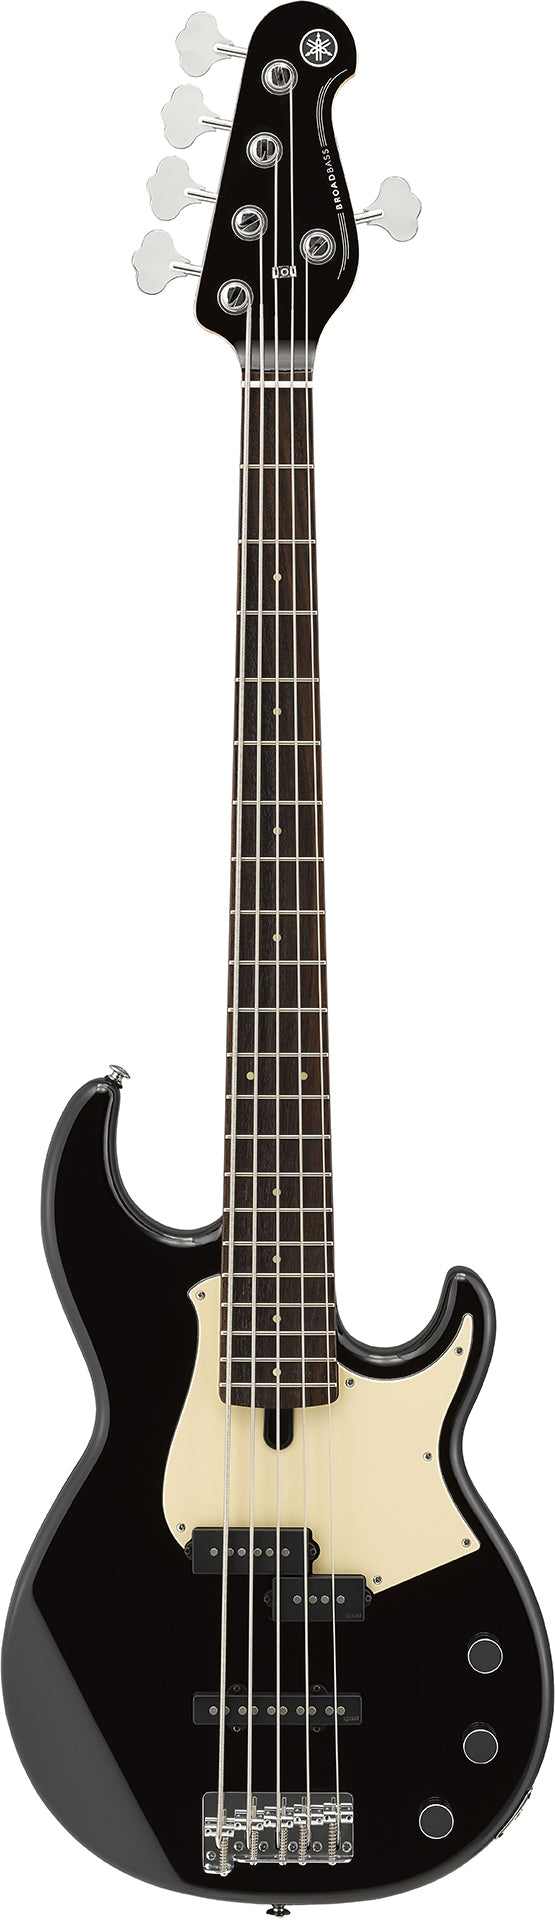 Yamaha BB435 BB-Series 5-String Bass Guitar, Black